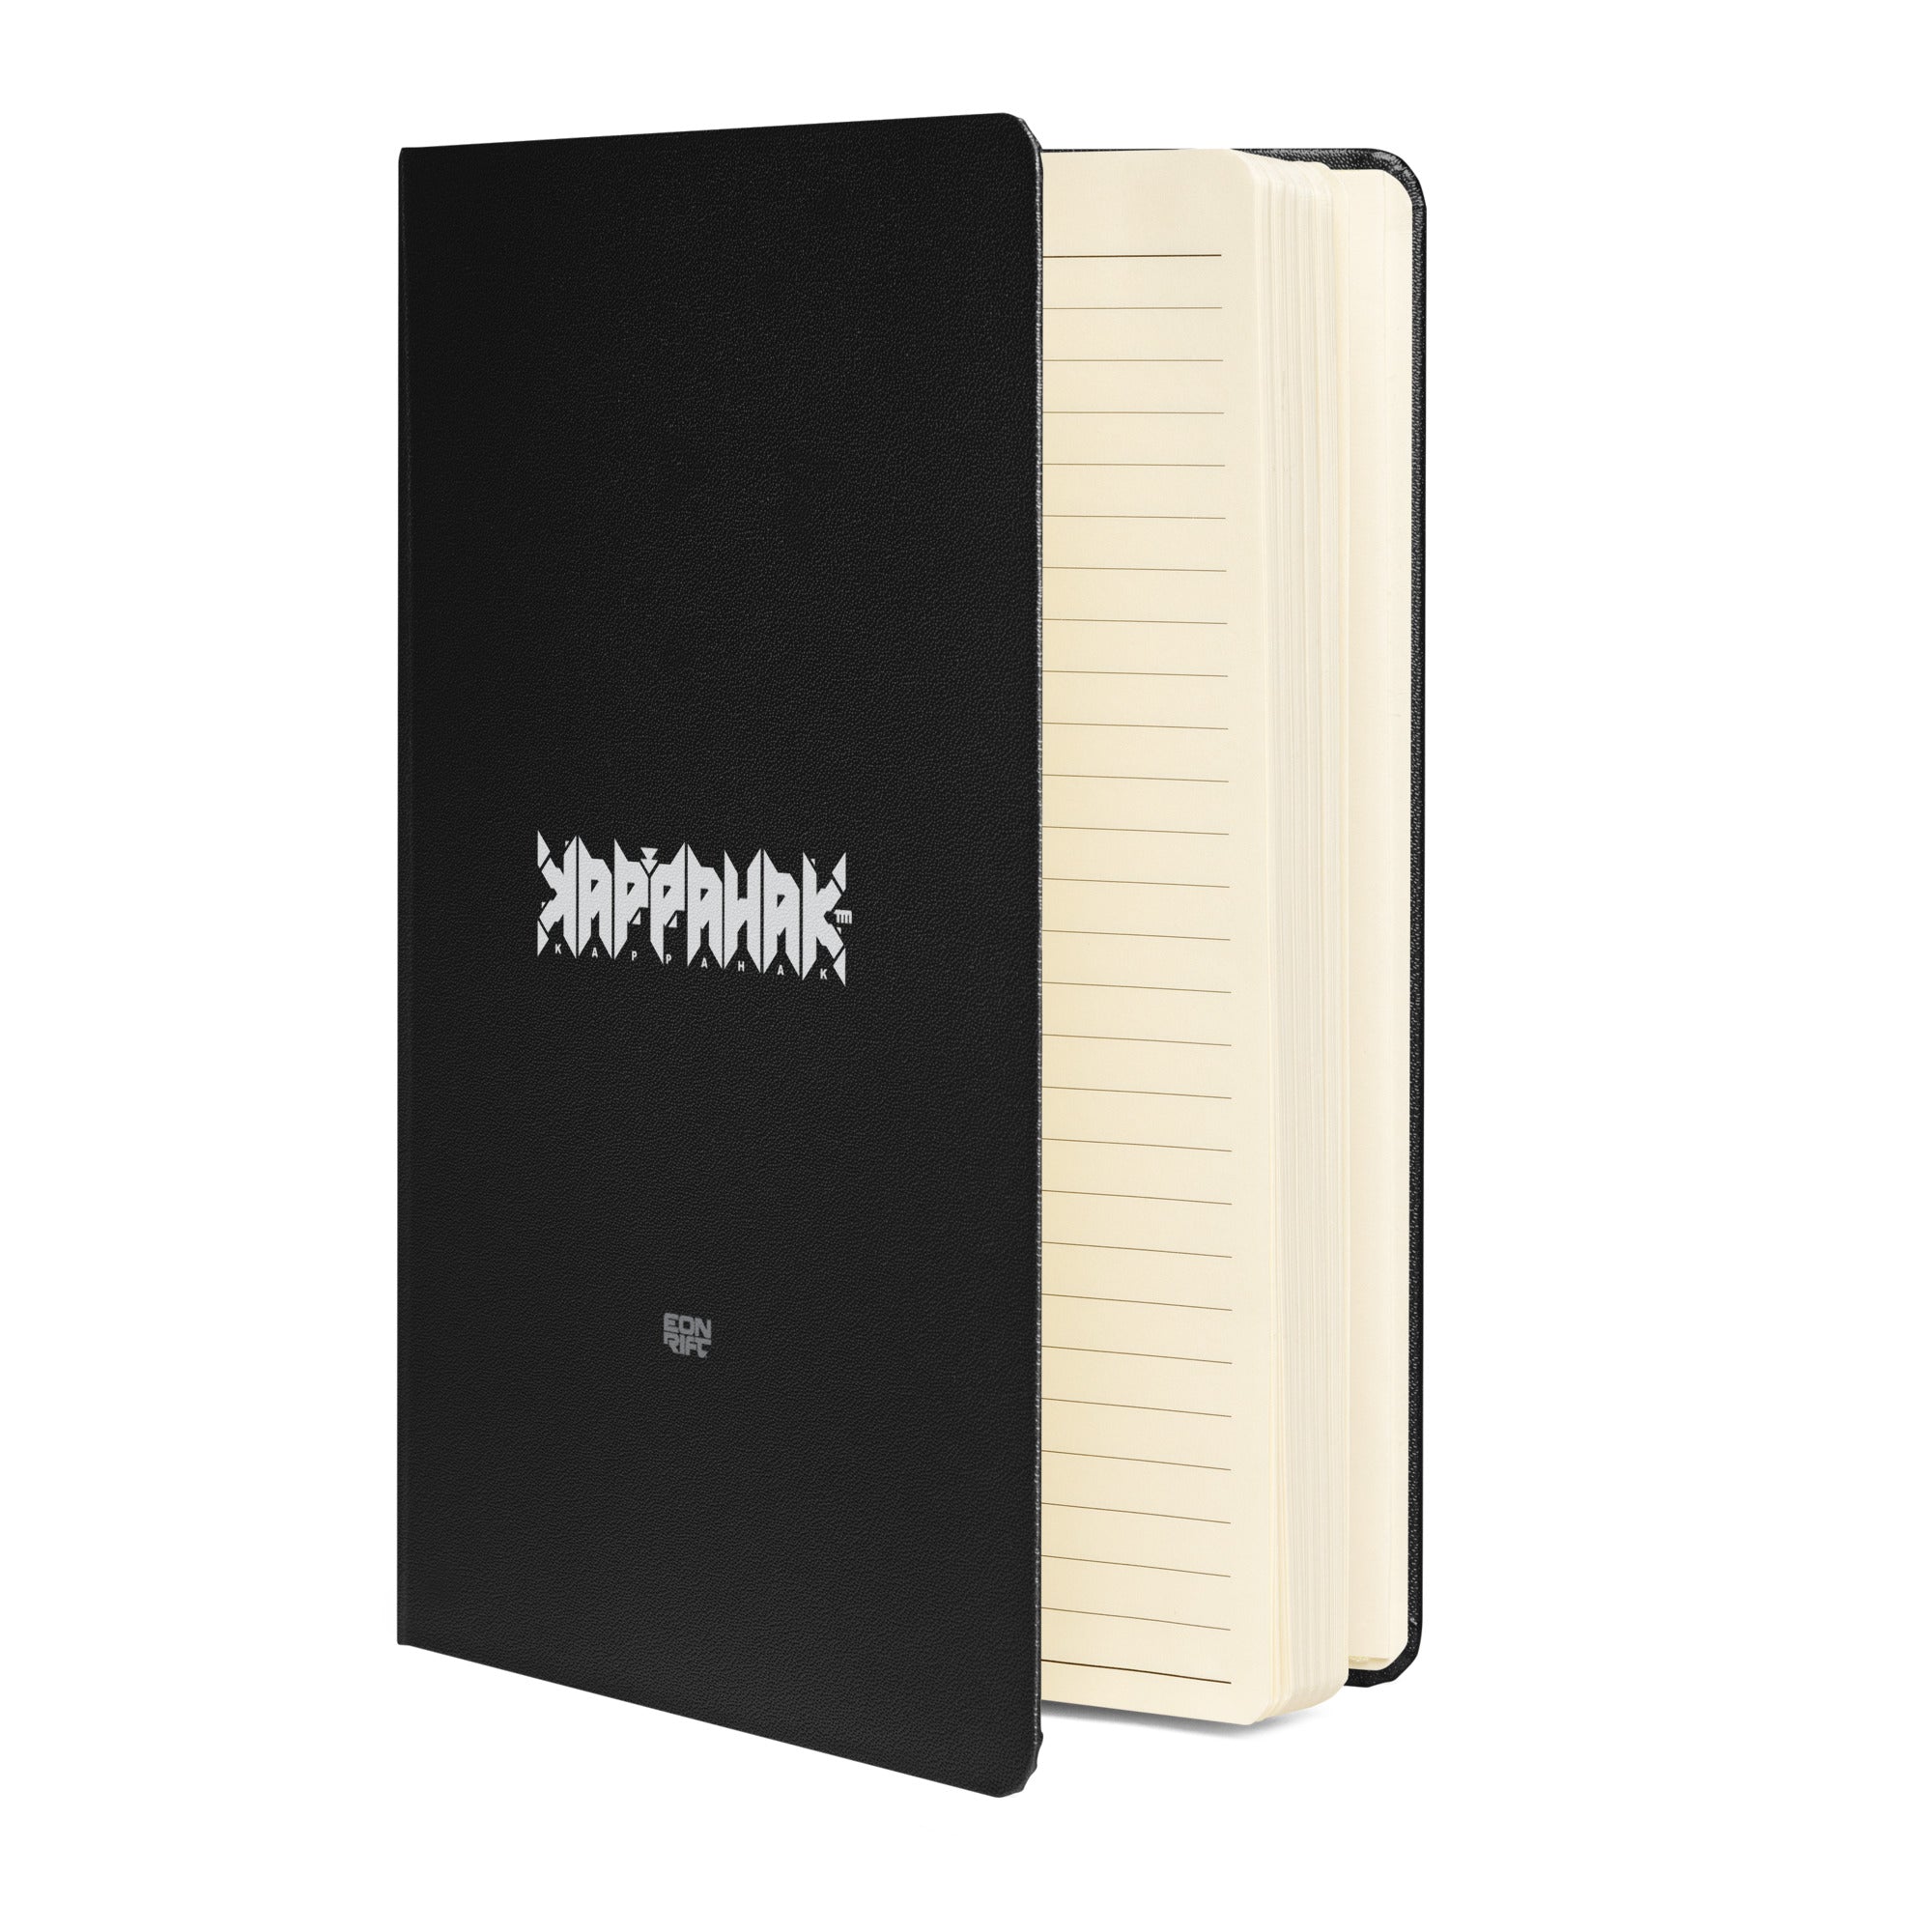 KAPPAHAK | Hardcover bound notebook